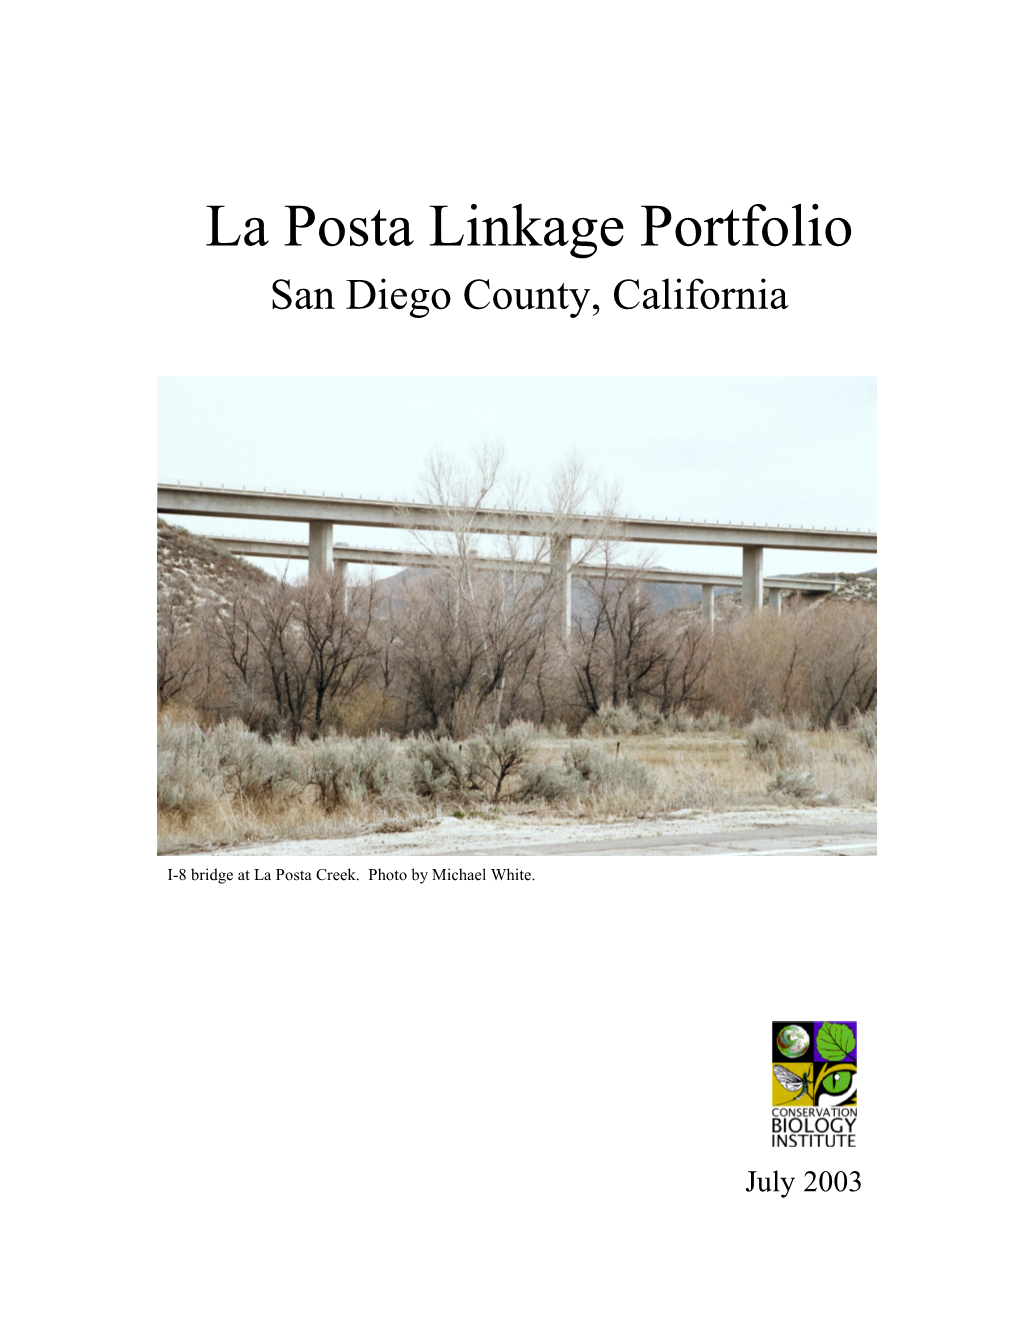 La Posta Linkage Portfolio San Diego County, California